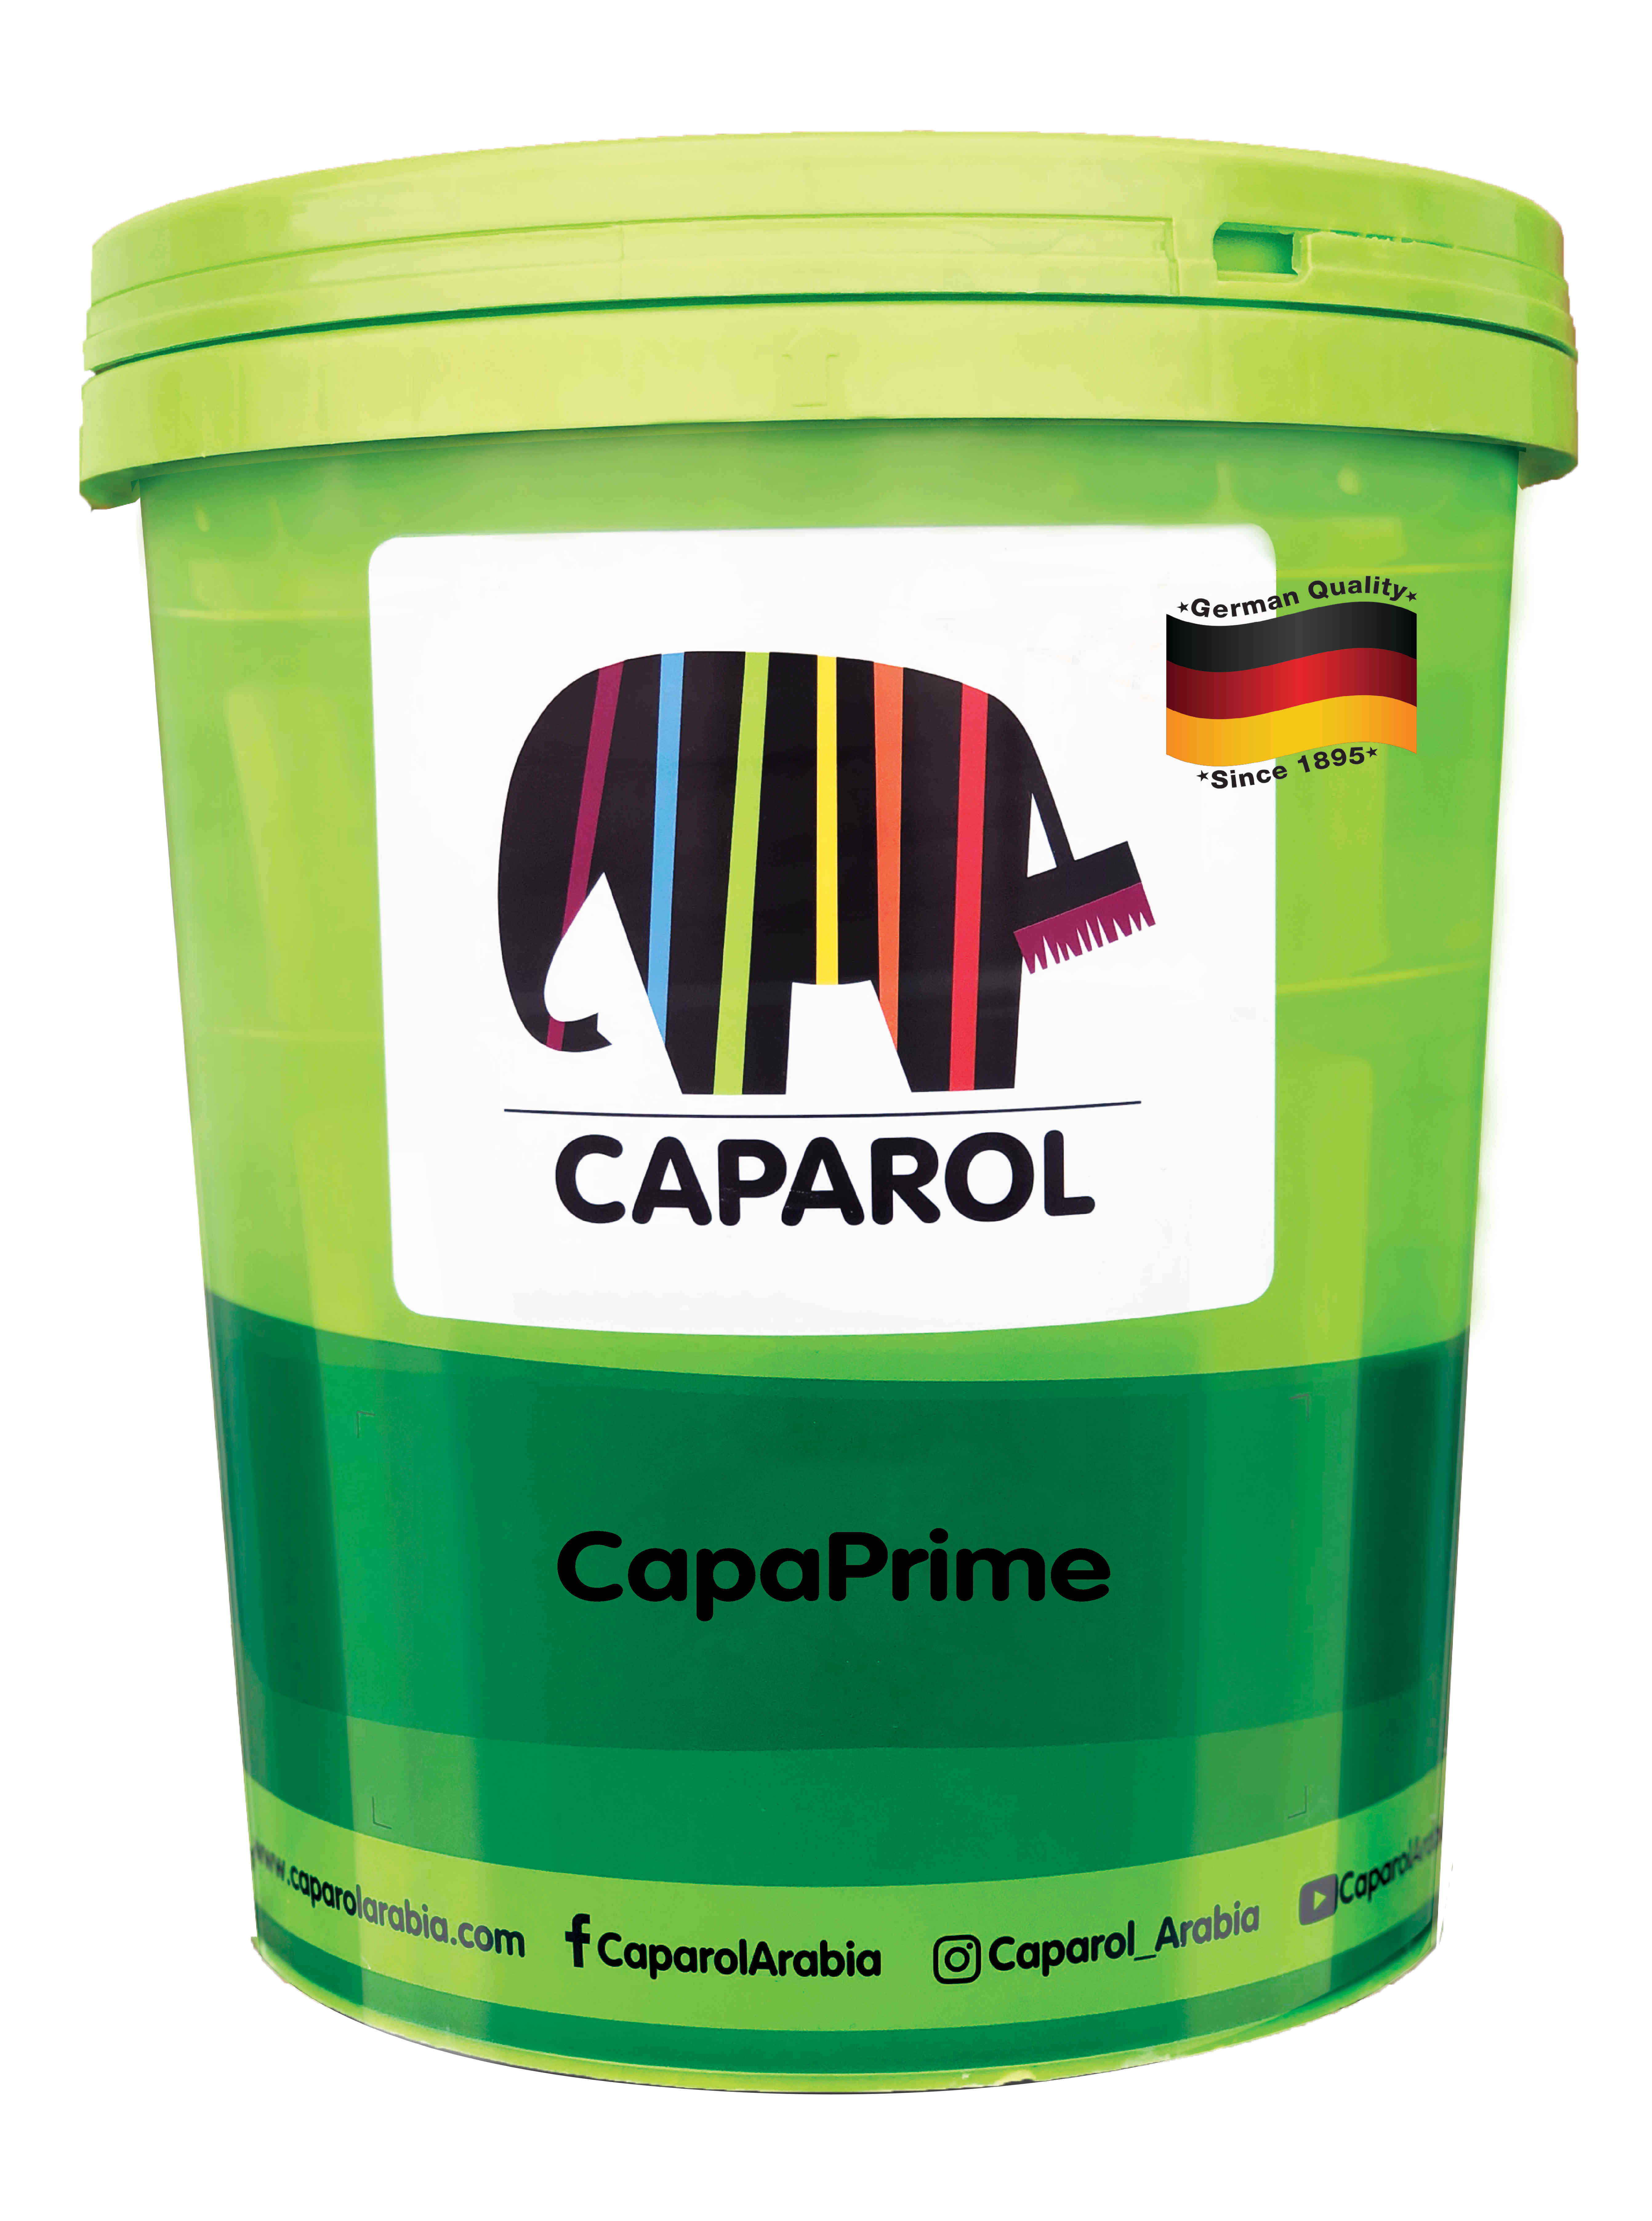 CapaPrime - Acrylic co-polymer primer for INTERIOR use on render/plaster, gypsum boards